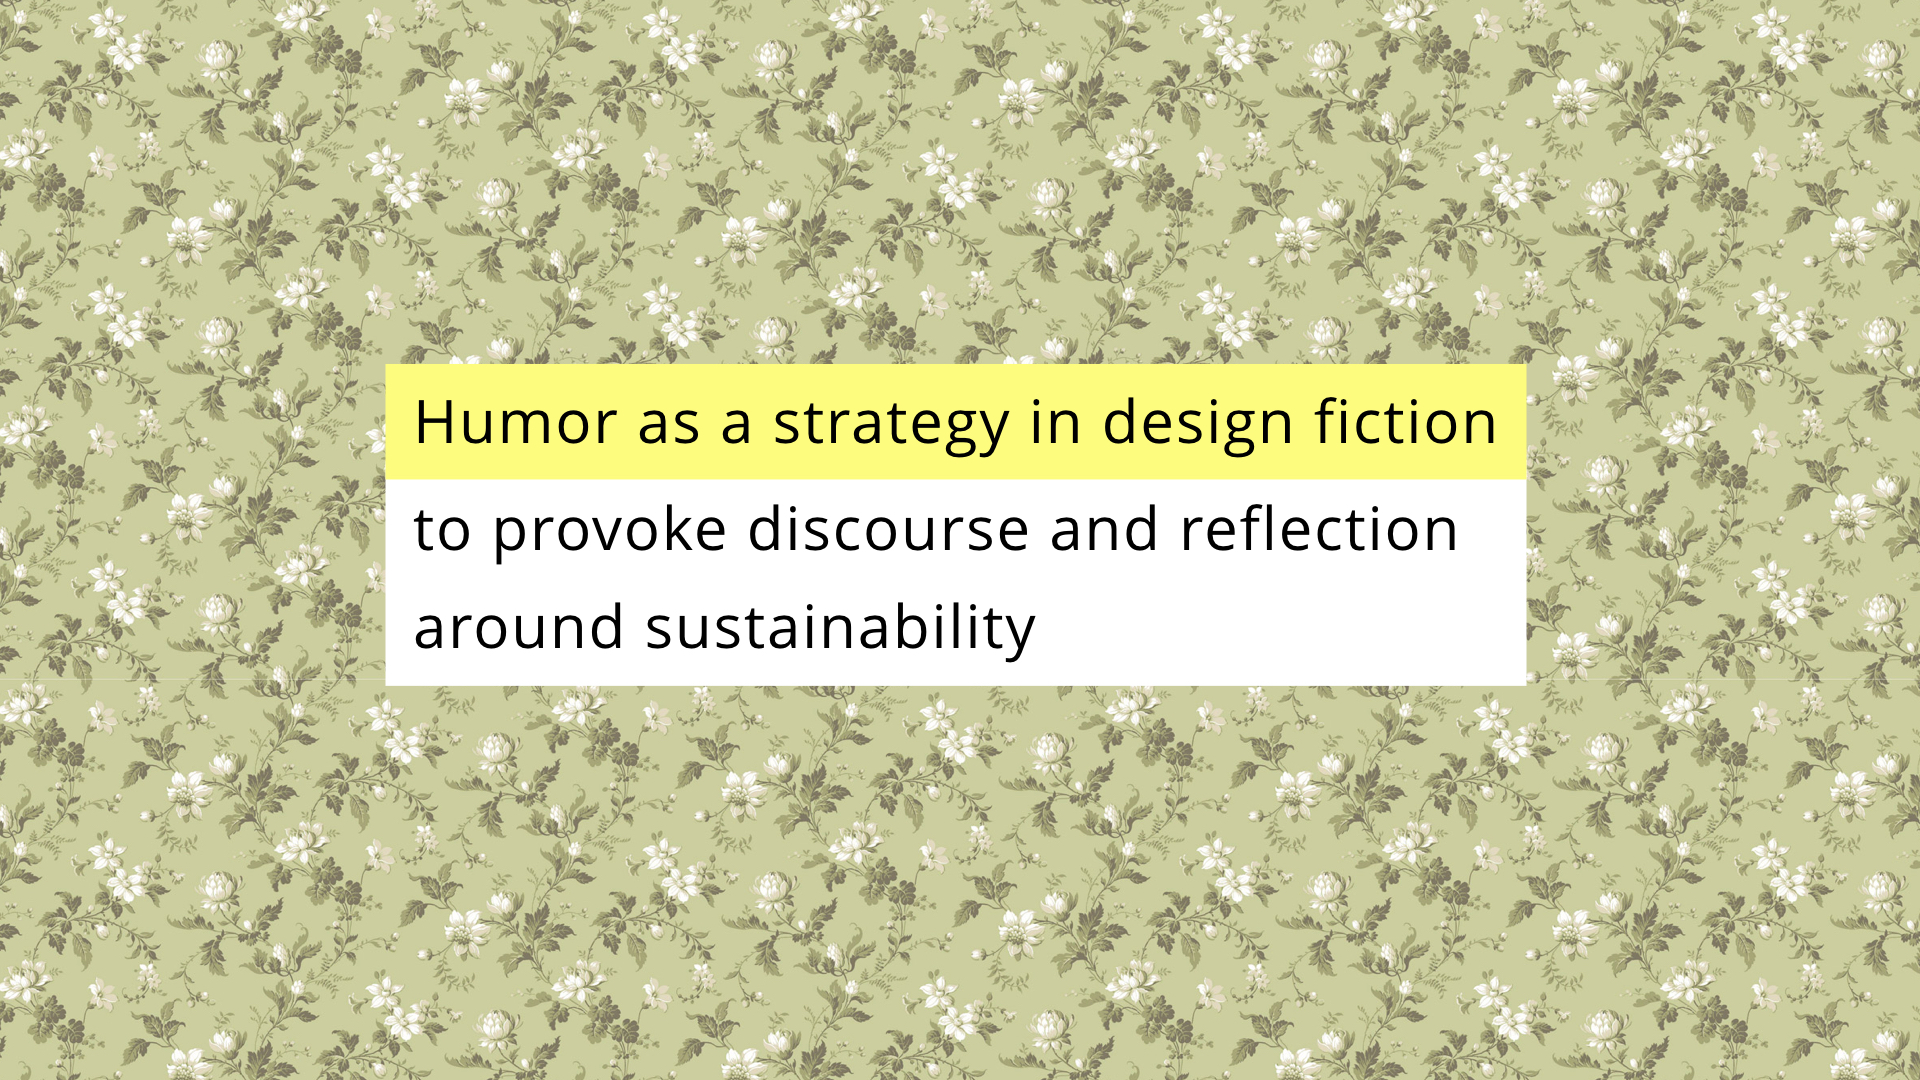 NordiCHI future scenarios presentation: Humor as a strategy in design fiction